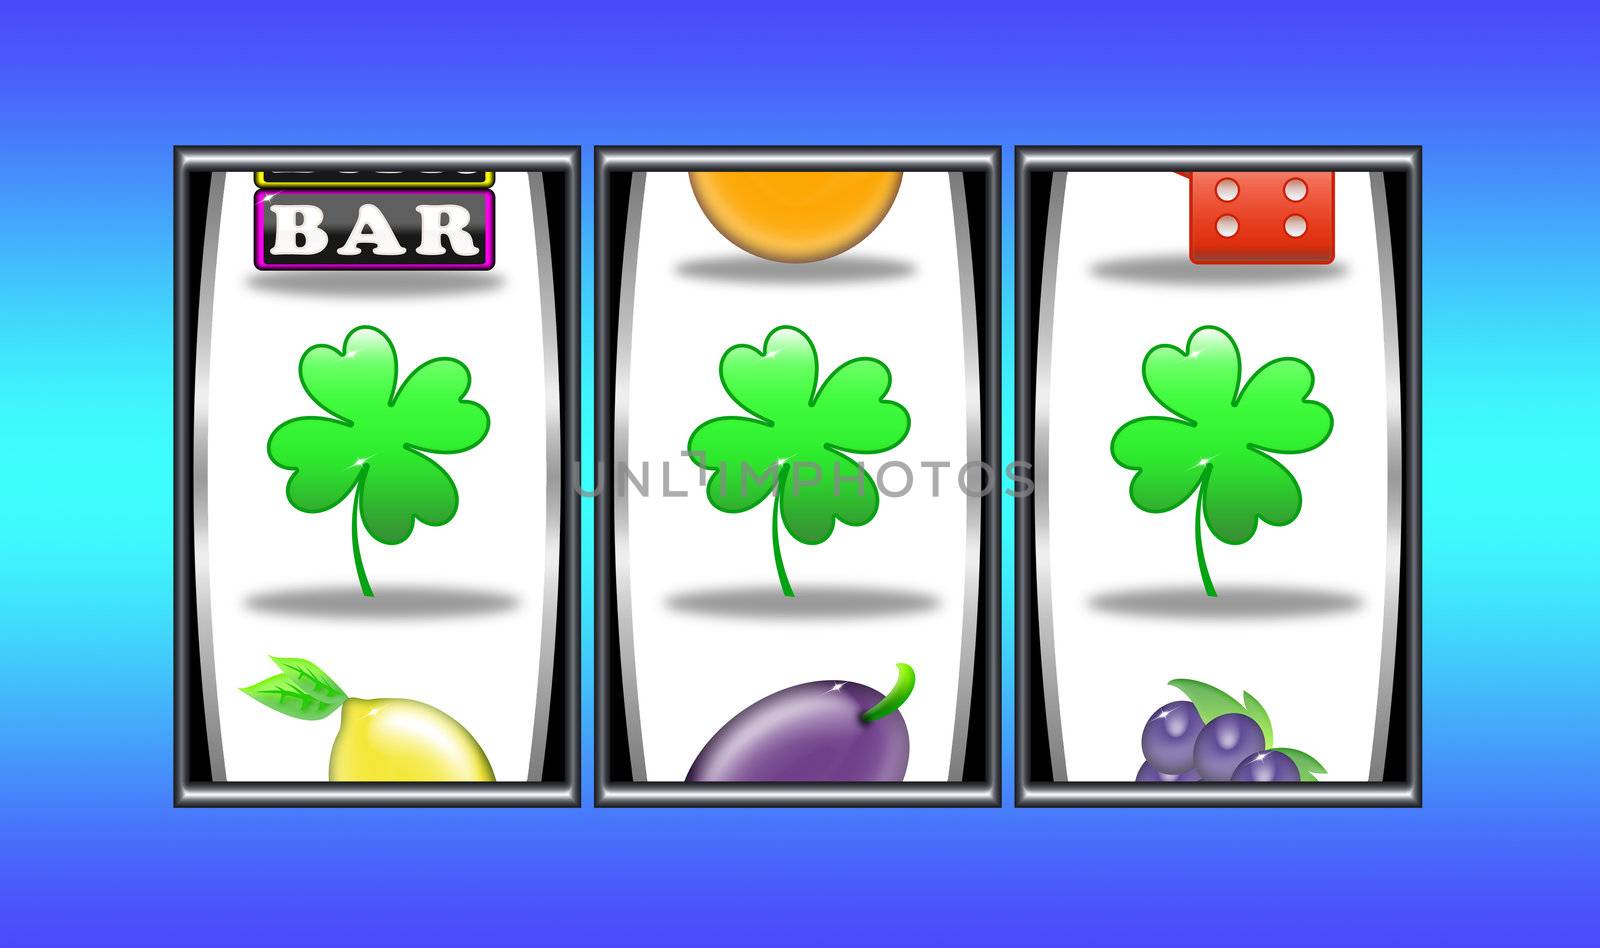 aligned symbols and win in slot machine
